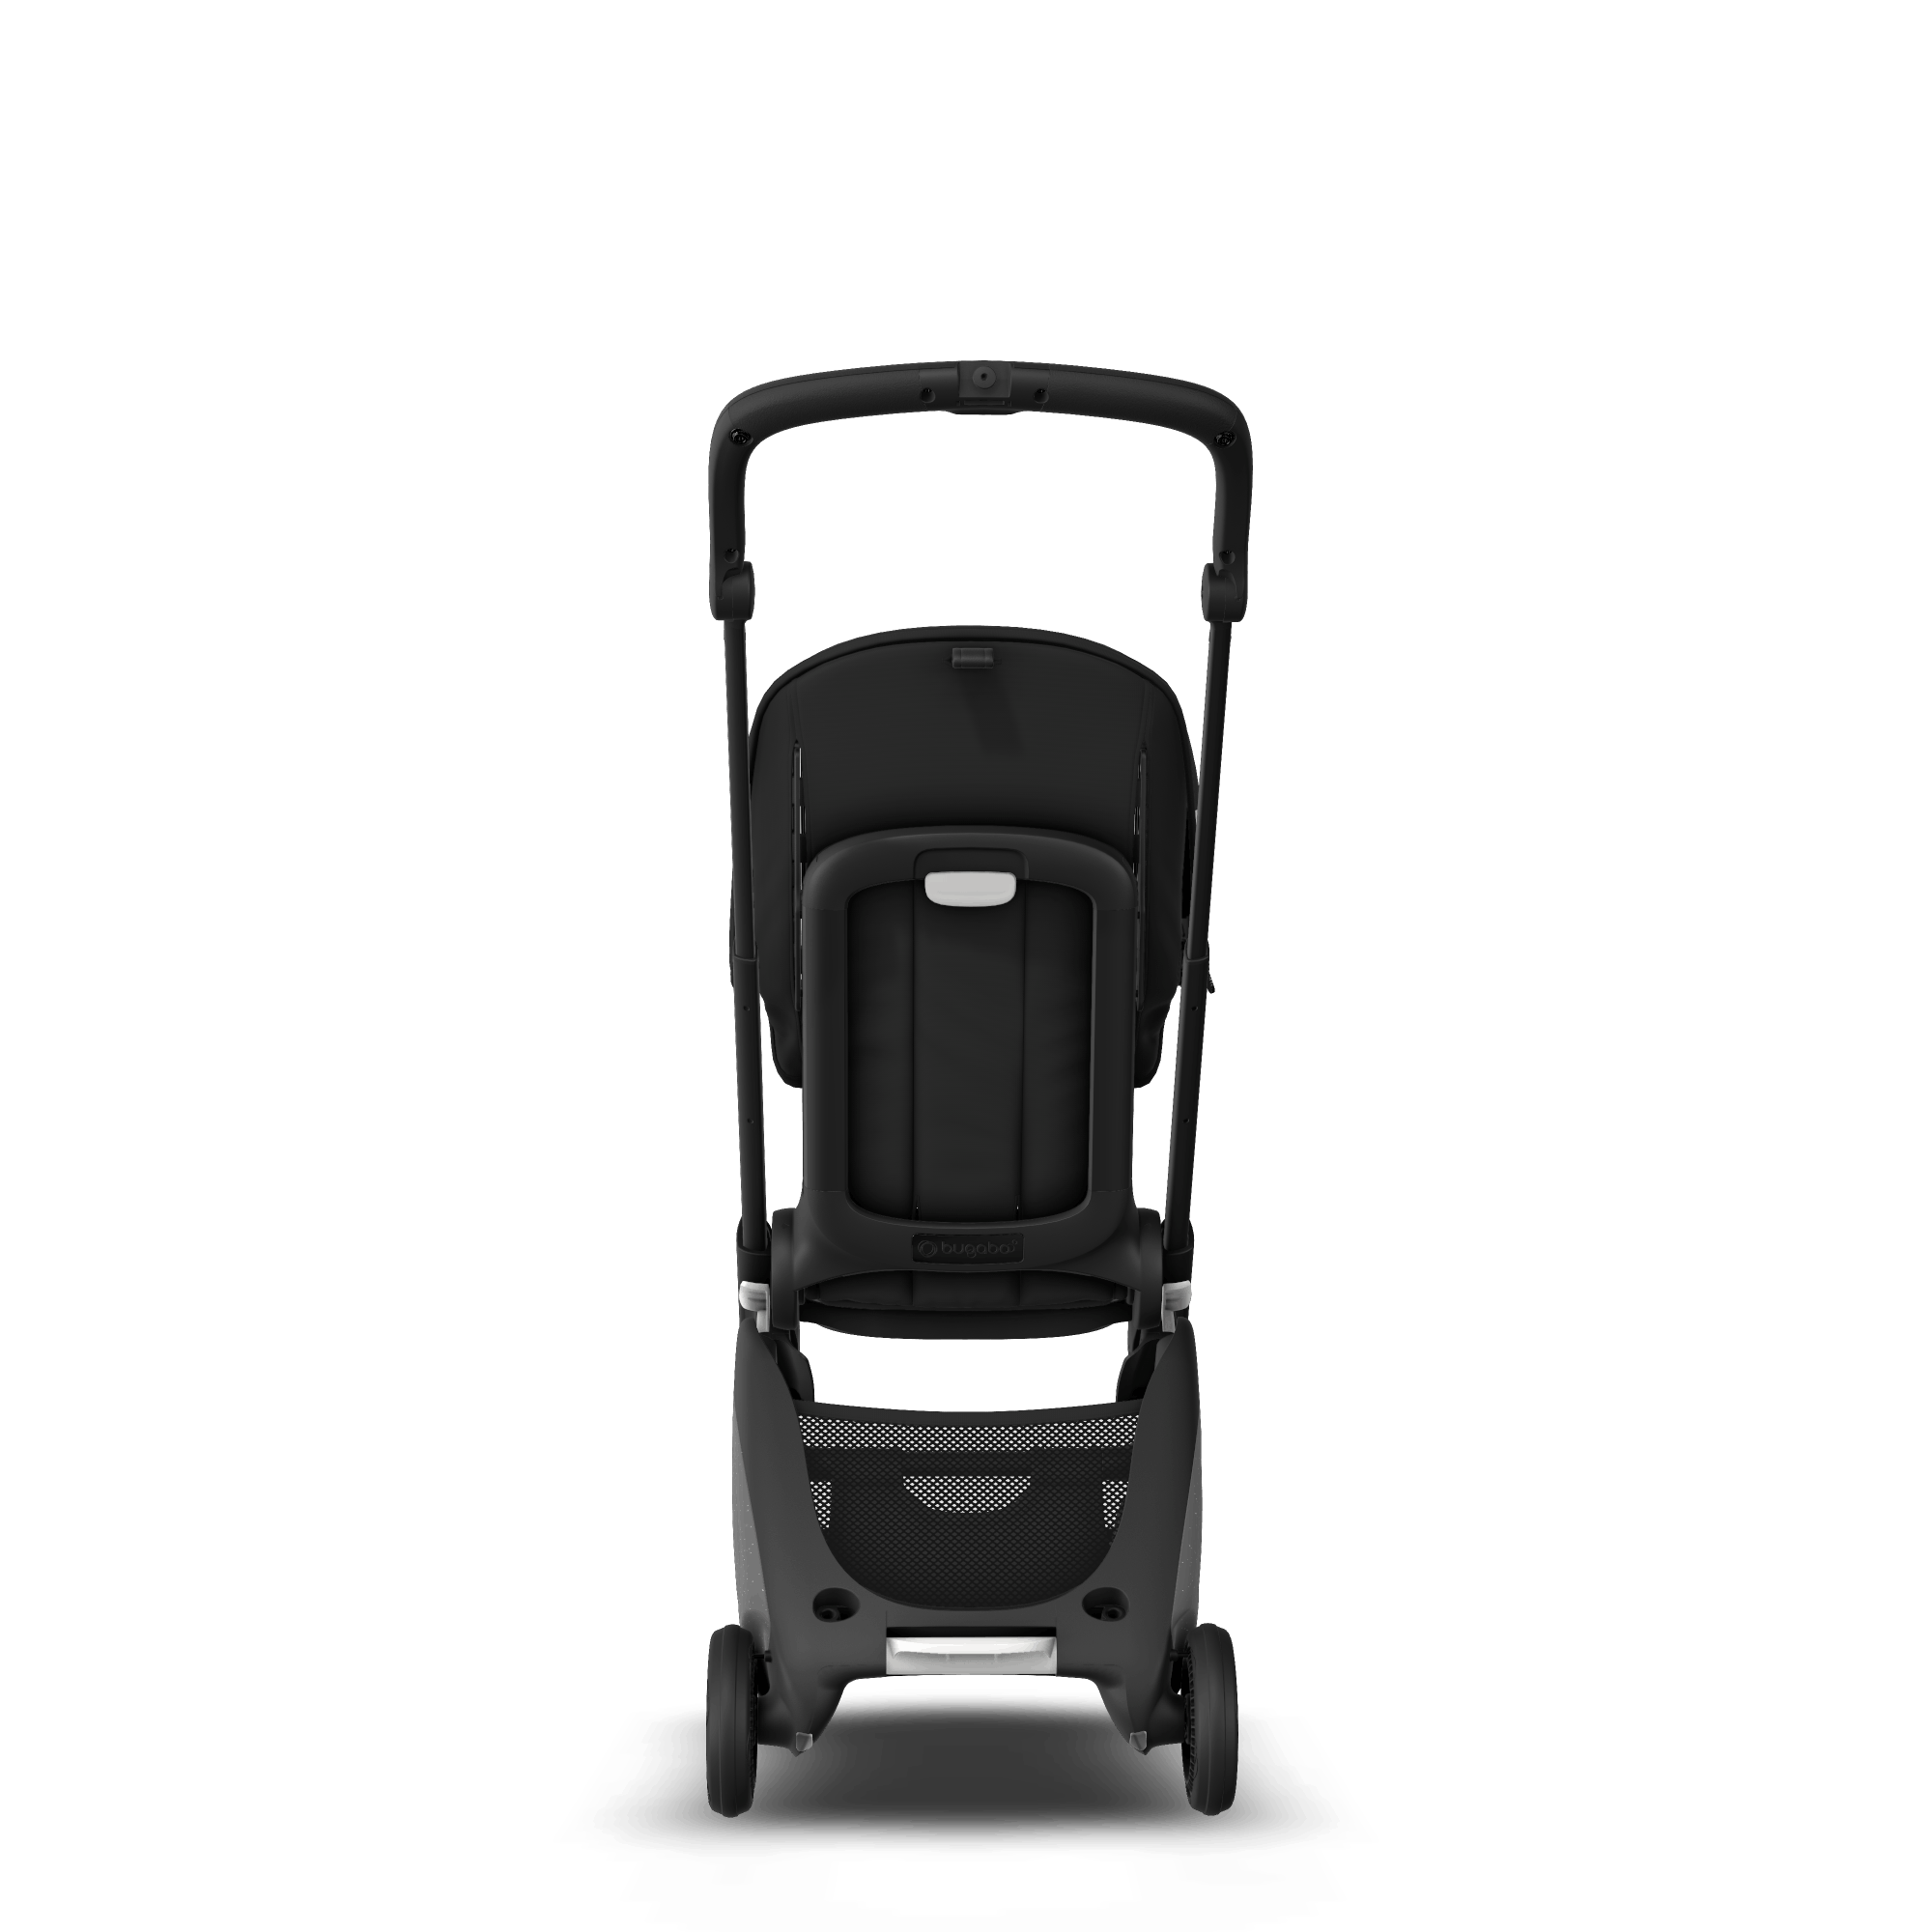 ultra compact stroller